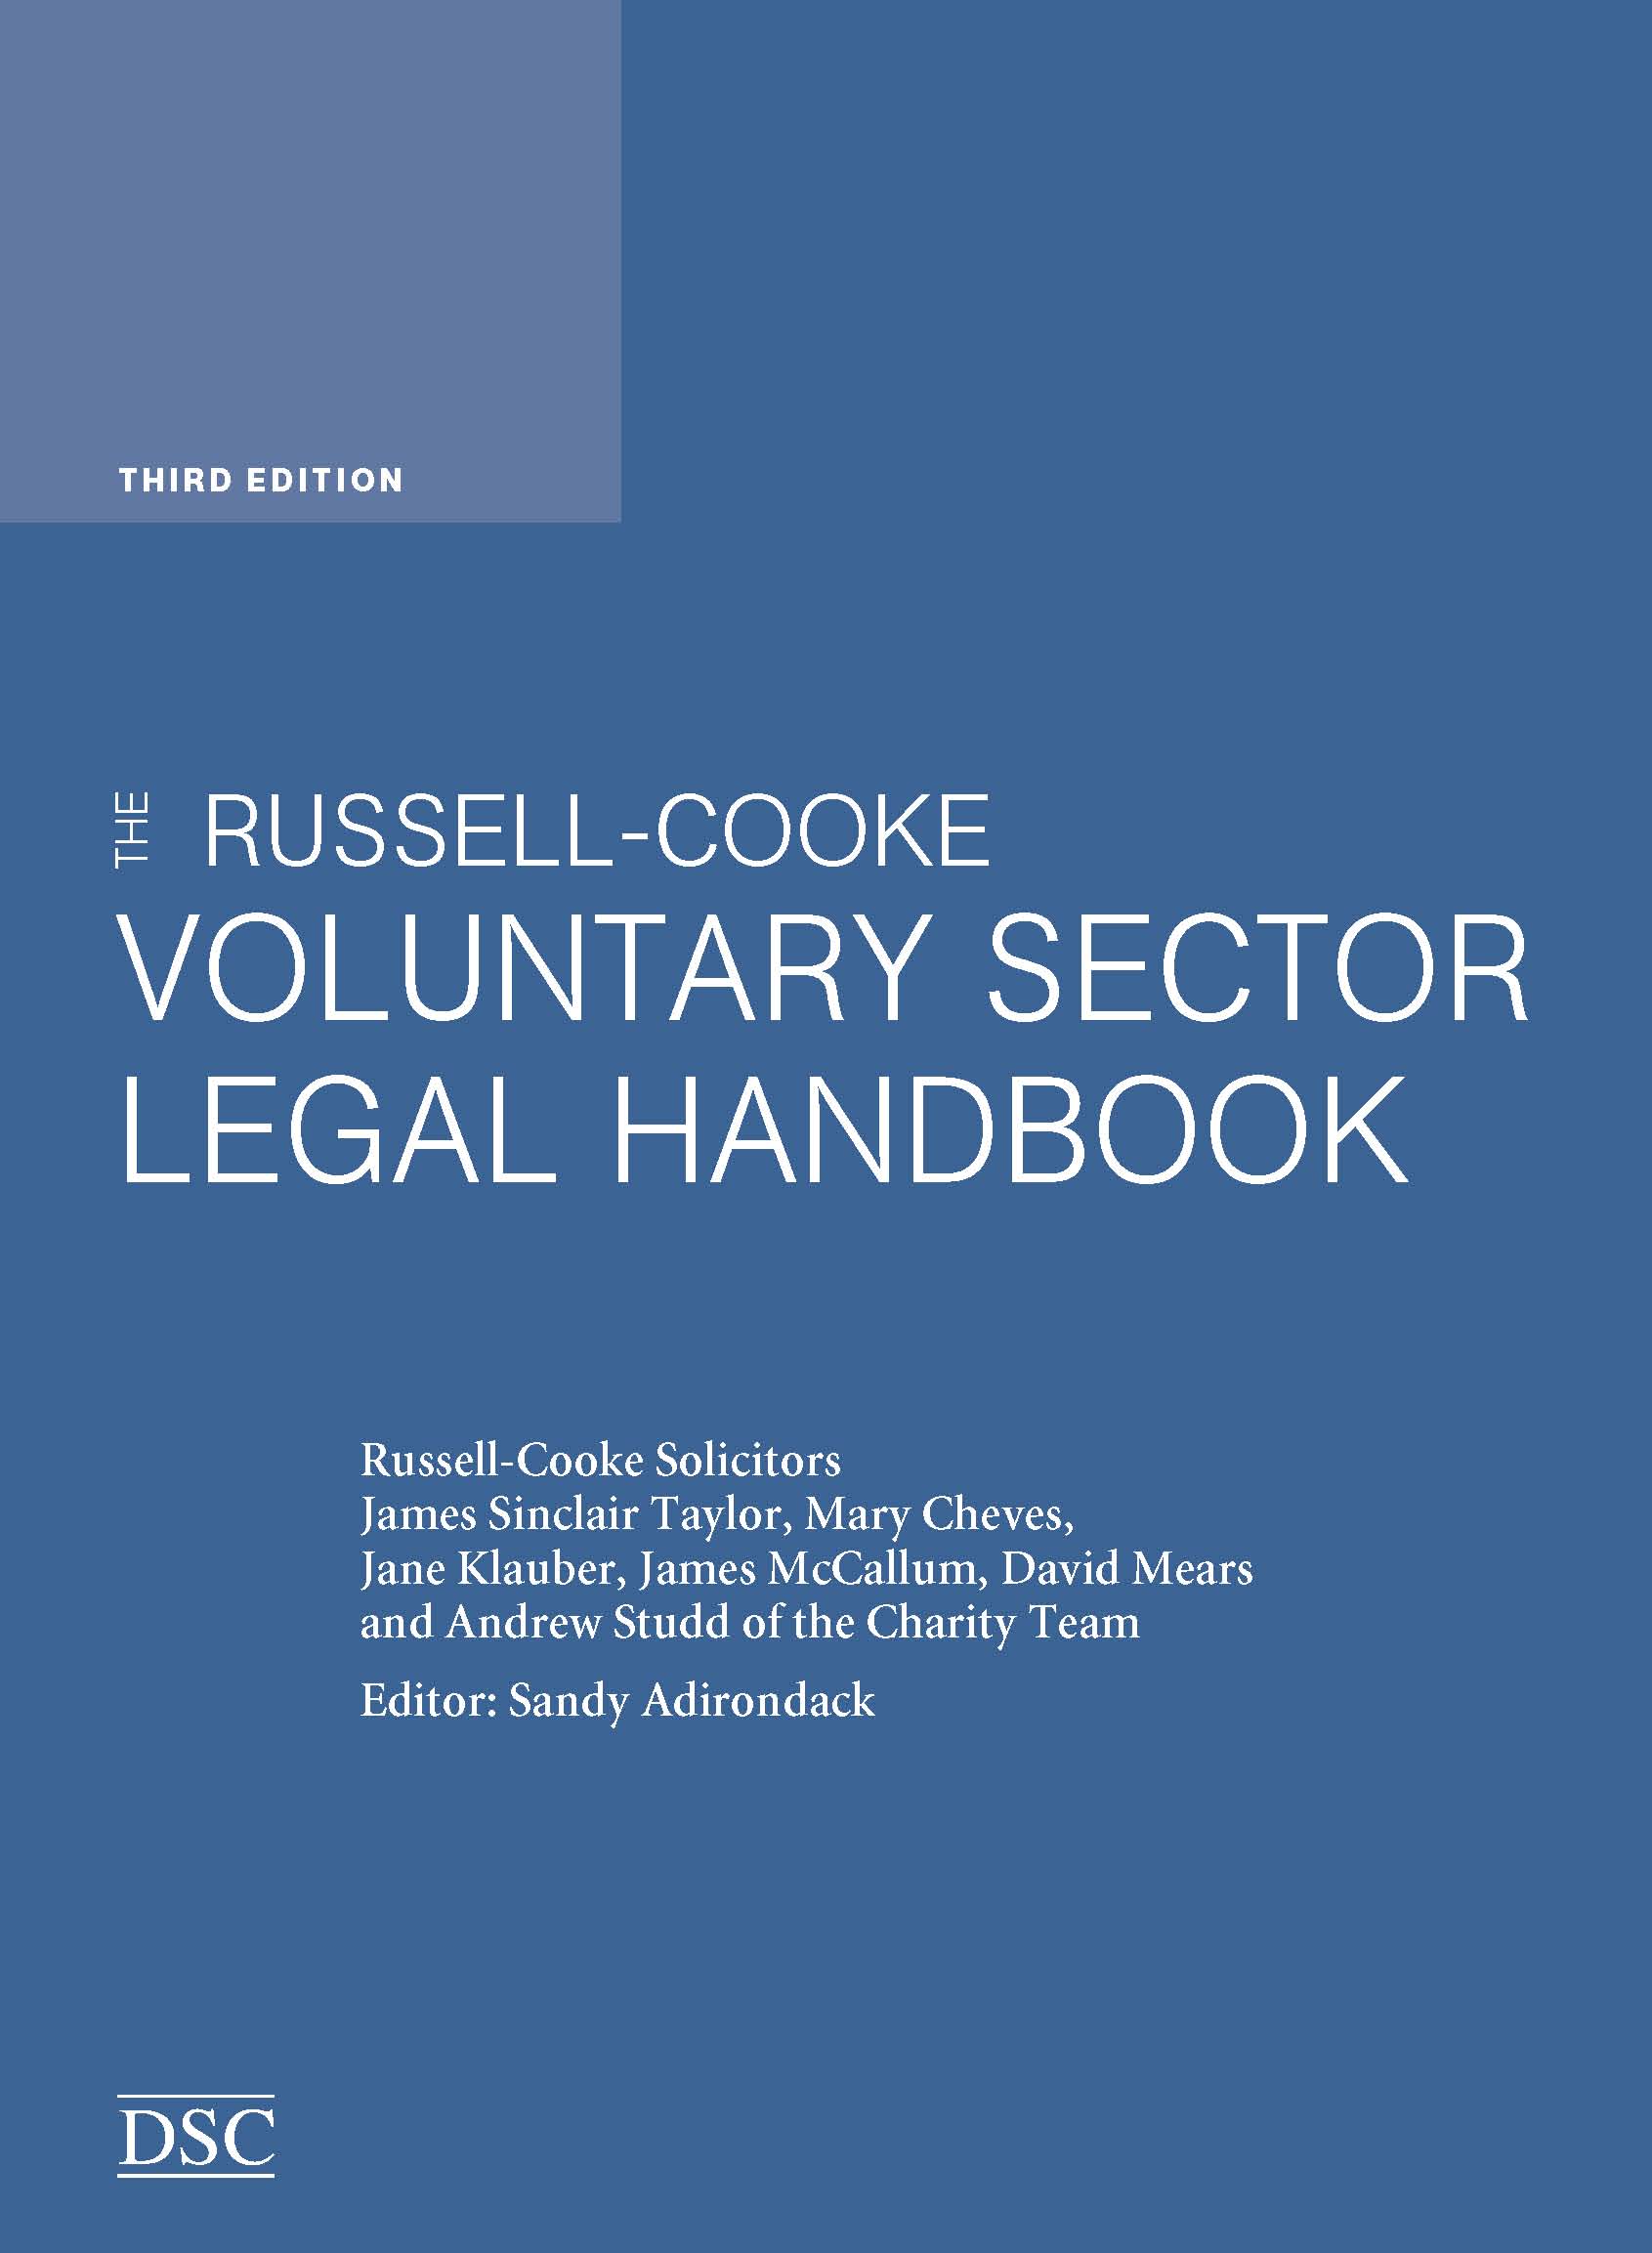 [Legal Handbook book cover]